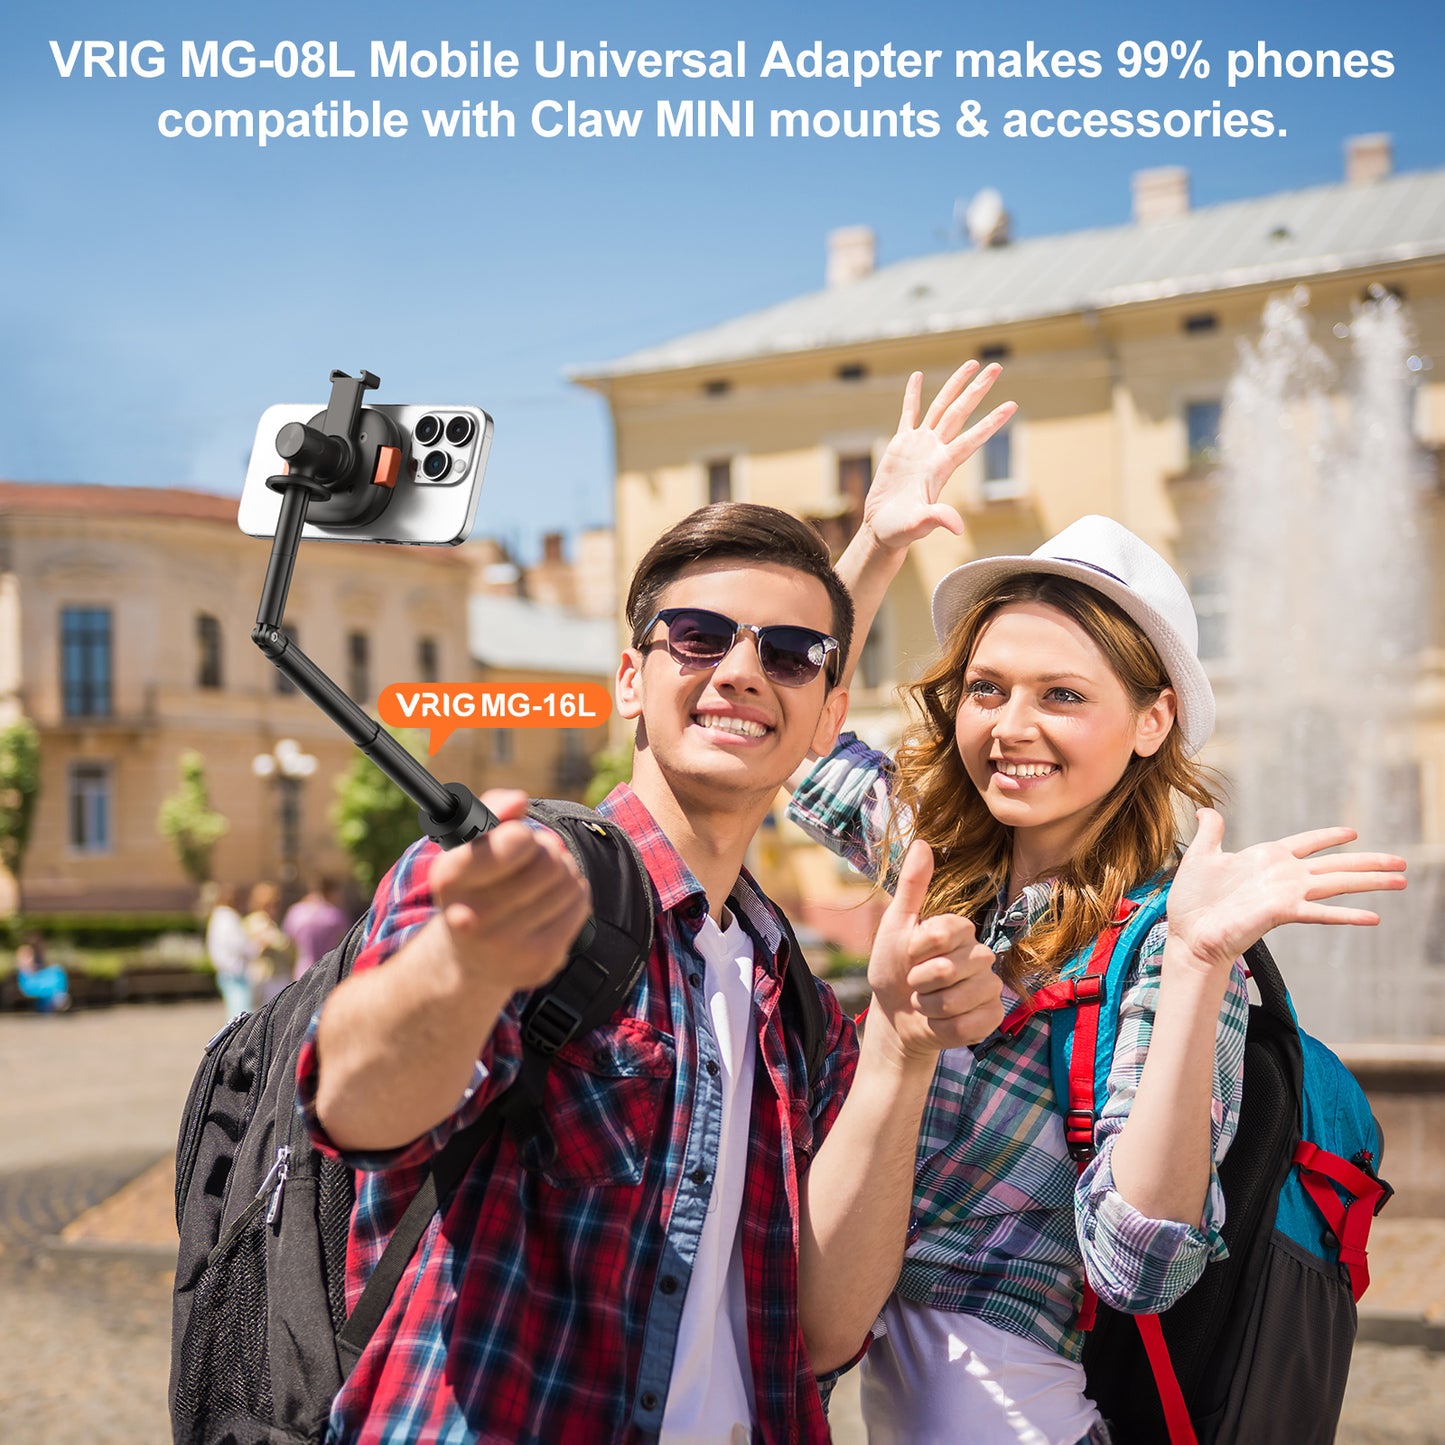 VRIG Mobile Universal Adapter